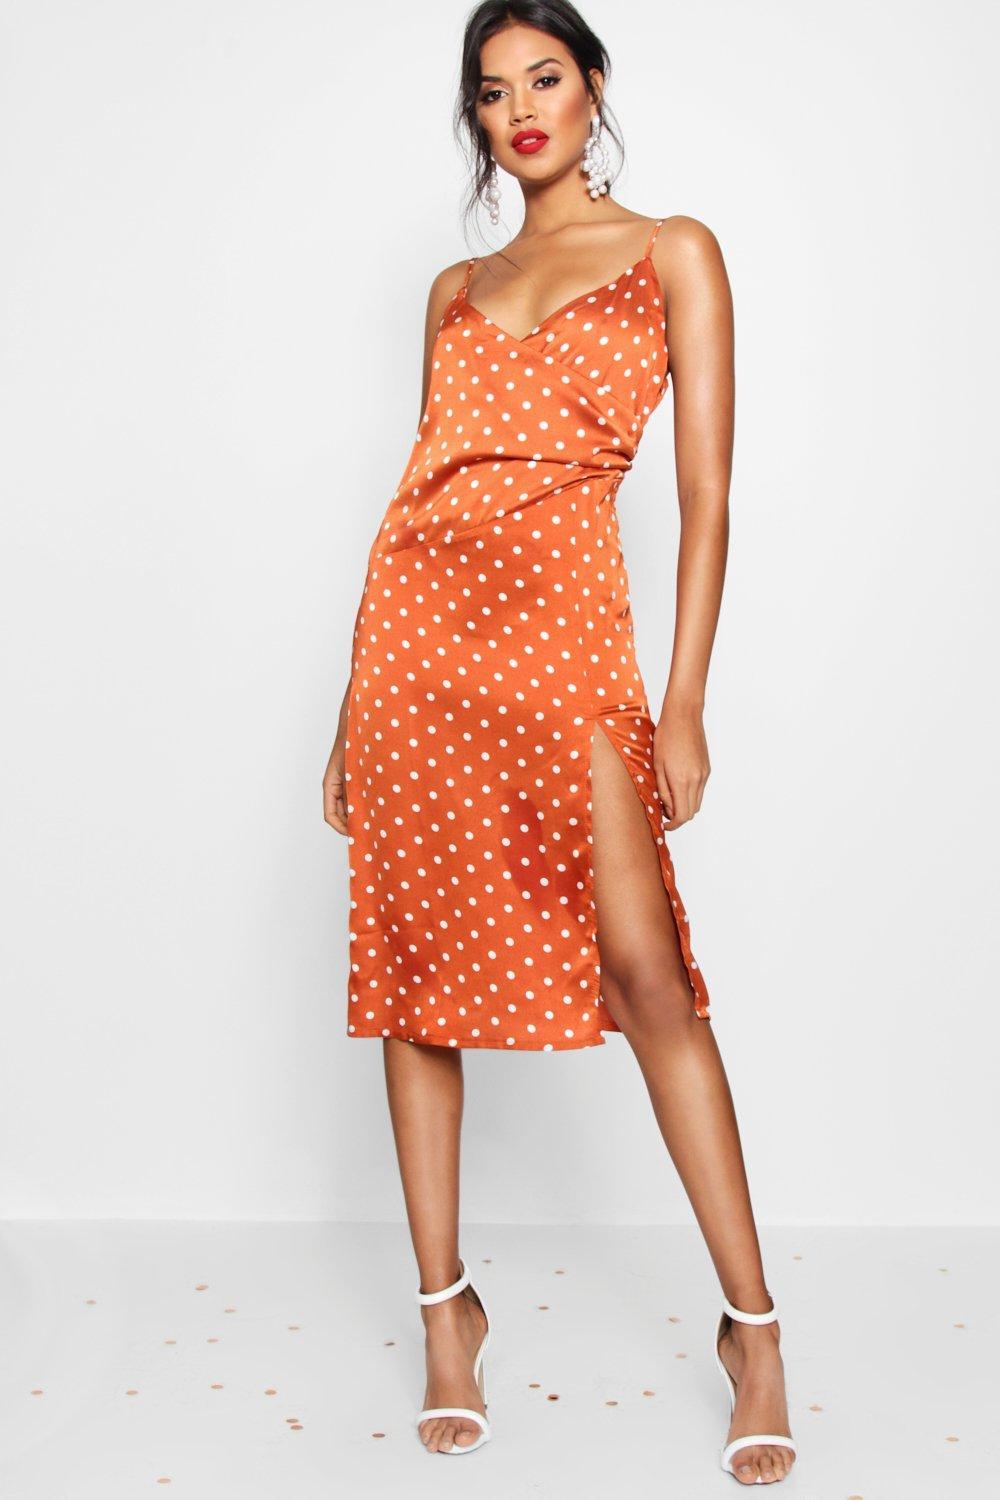 Boohoo Boutique Satin Polka Dot Wrap Slip Dress in Navy (Orange) | Lyst